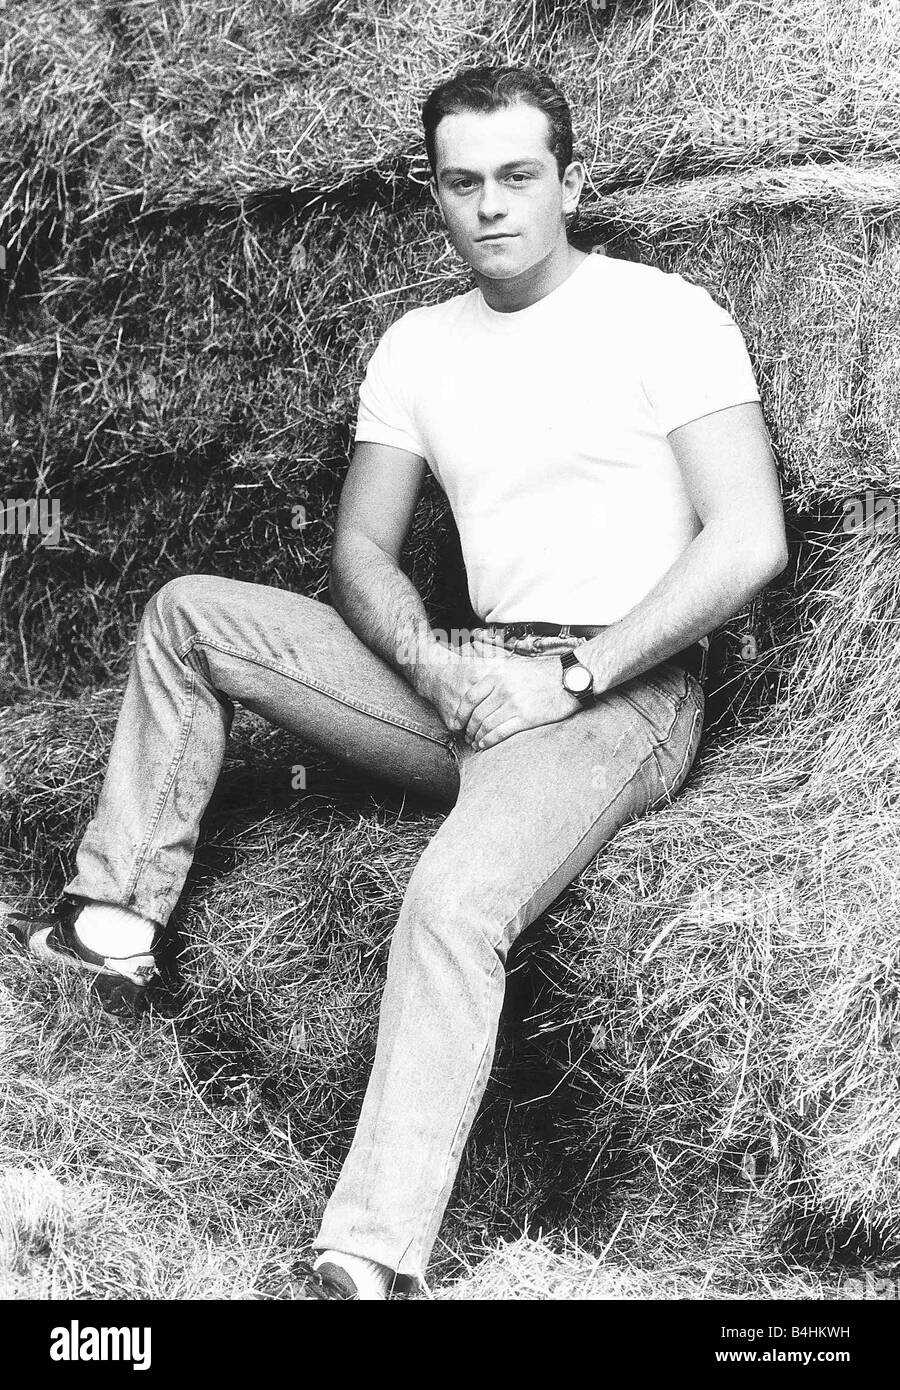 Ross Kemp Schauspieler 22 am Set des TV-Programms Emmerdale Farm im November 1986 im Bild vor Ort sitzen Bails Heu Stockfoto